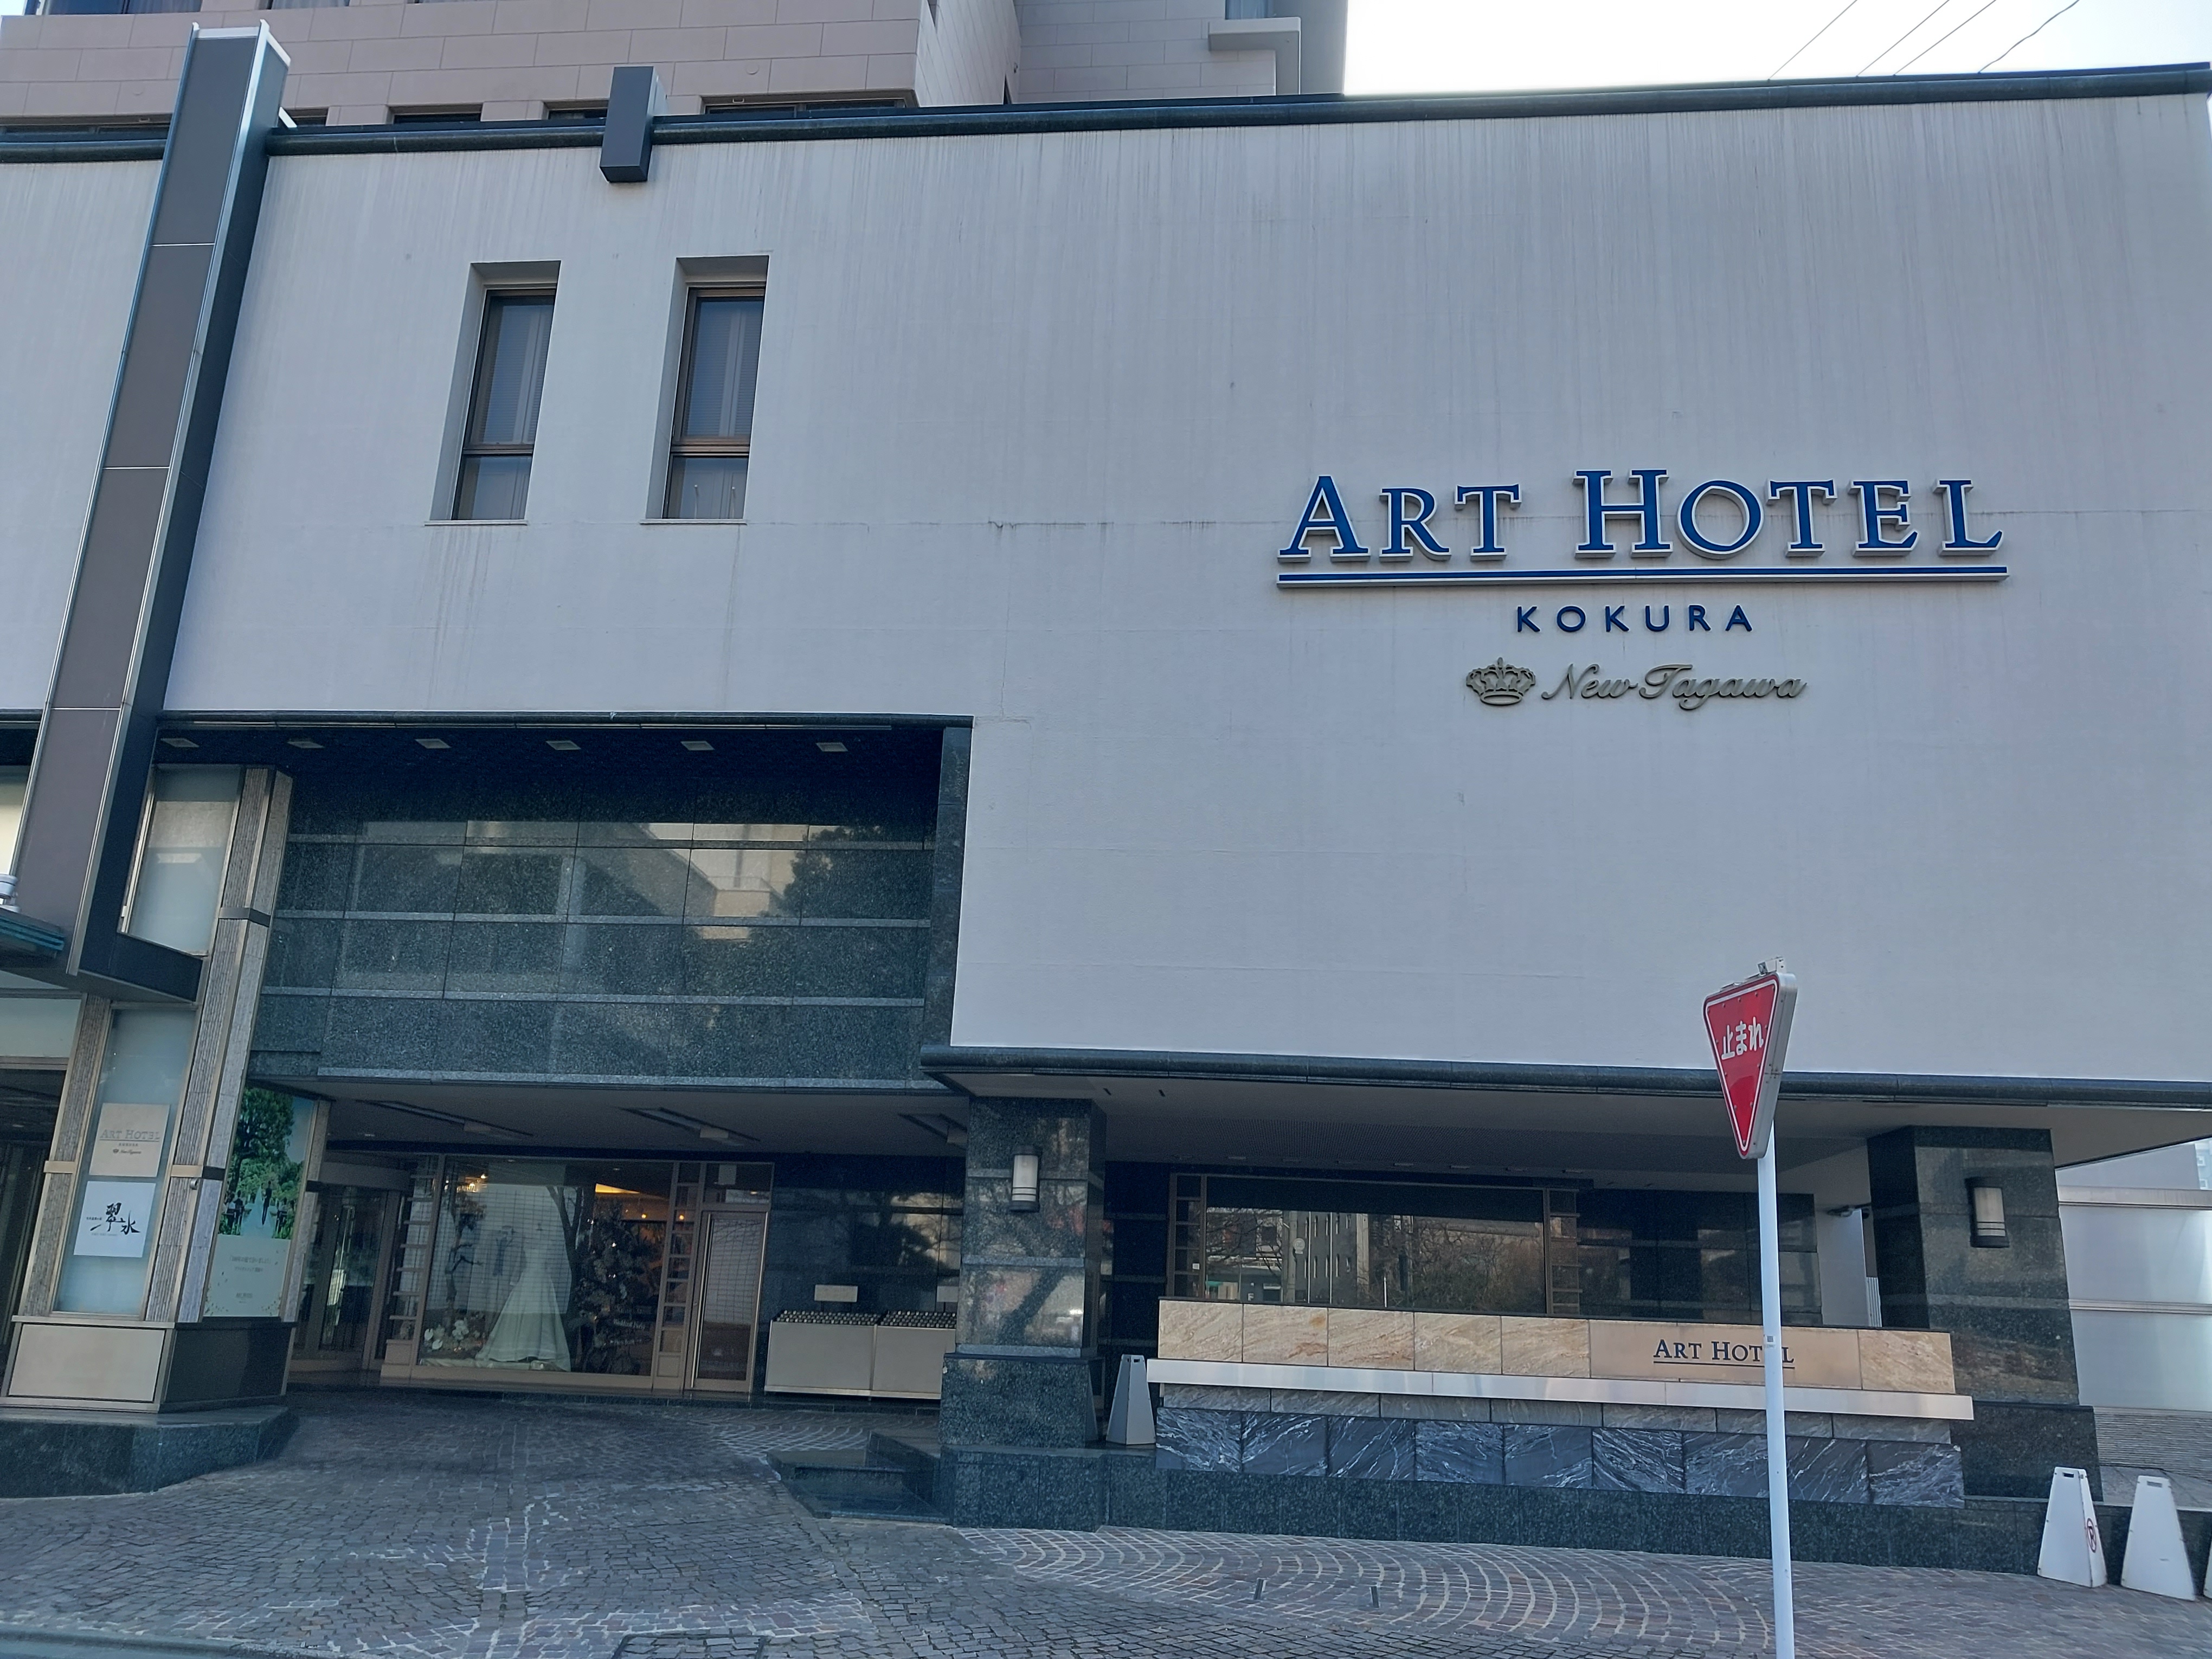 Art hotel